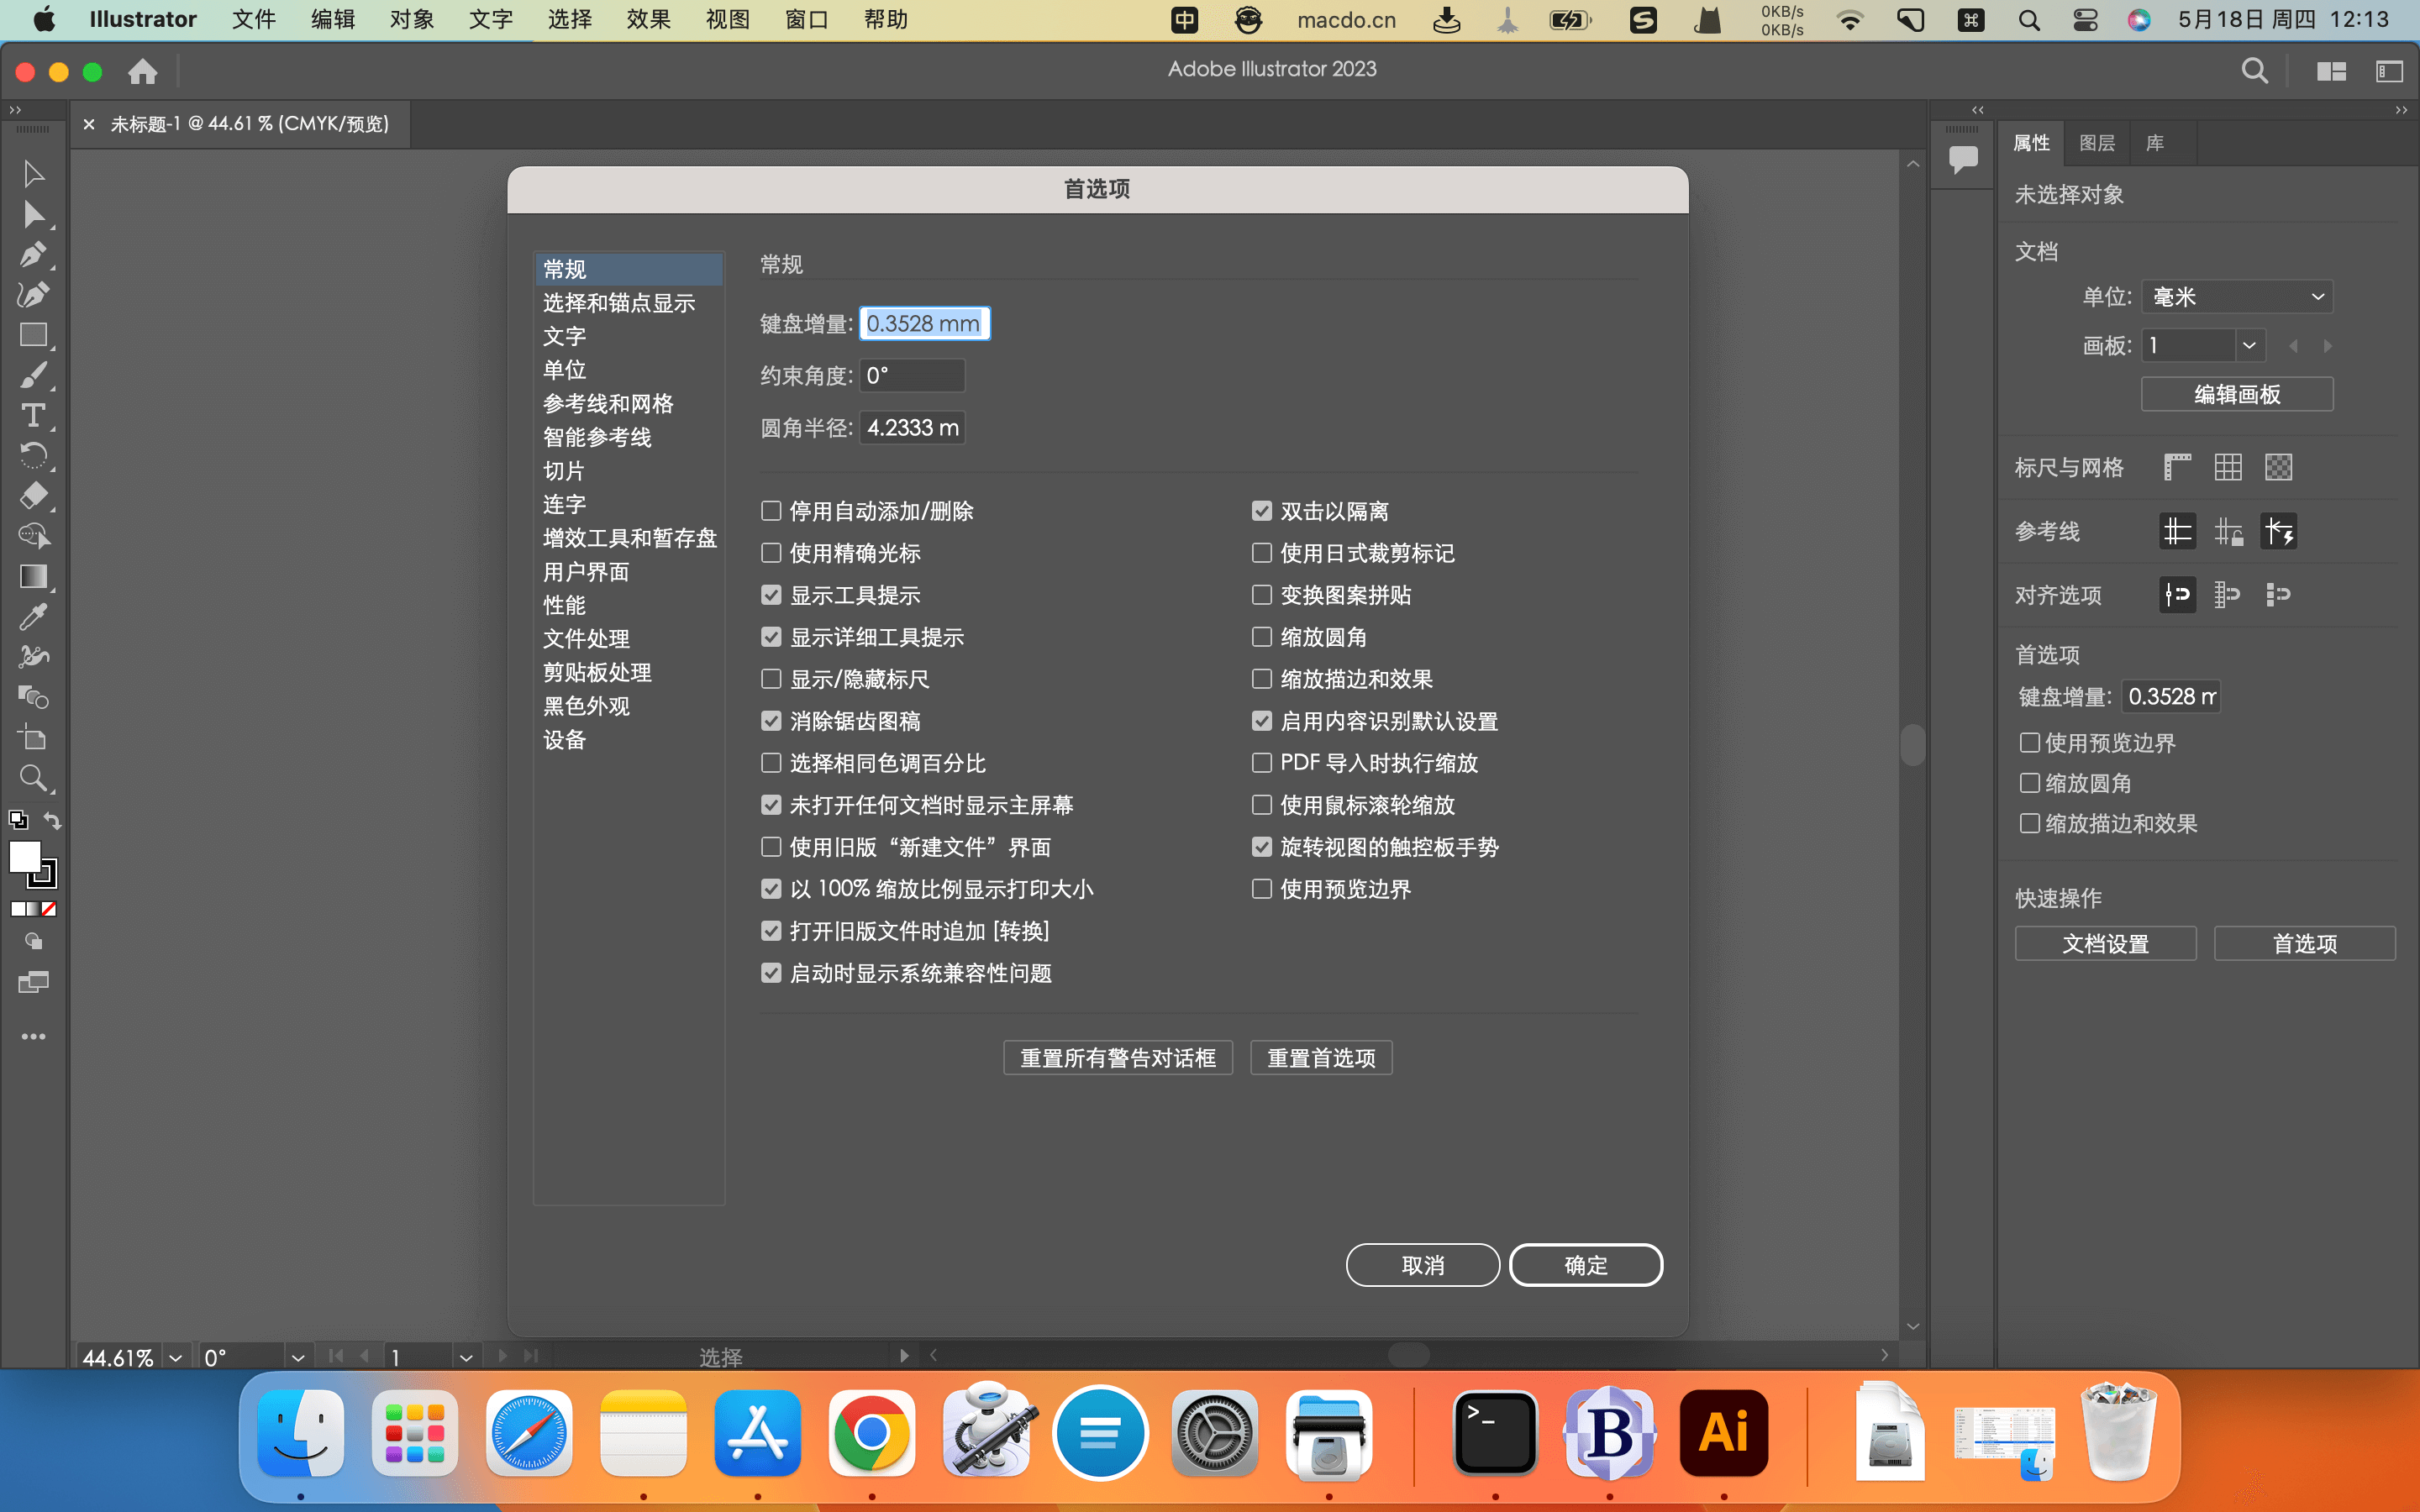 Adobe Illustrator 2023 for Mac v27.0.0 破解激活完整教程 苹果电脑